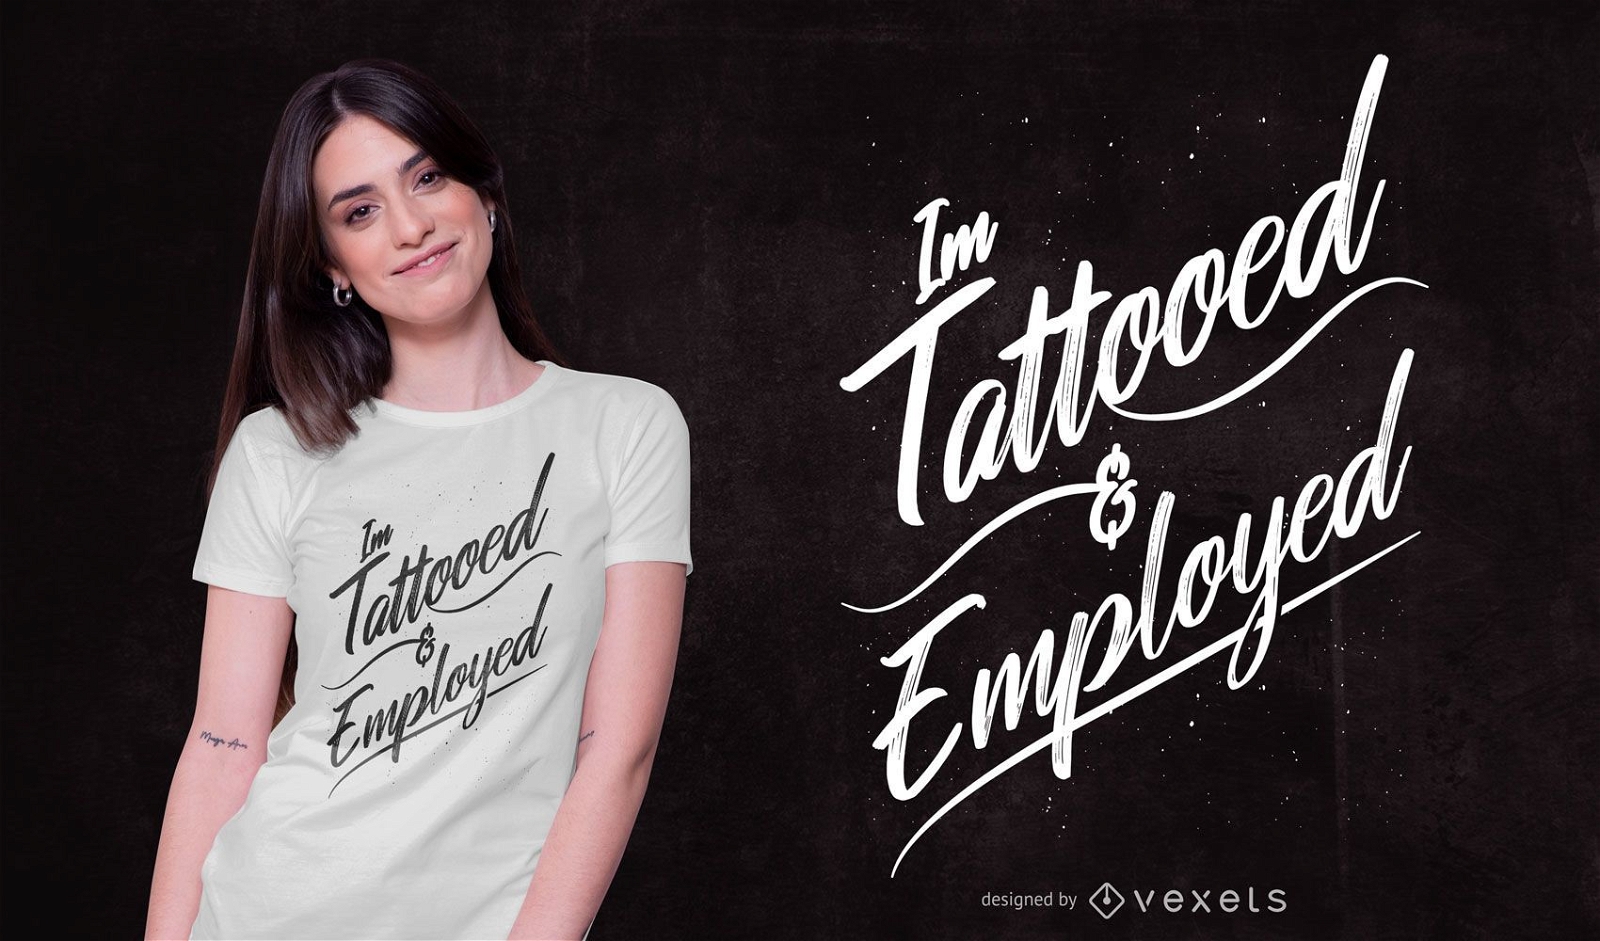 Tattooed quote t-shirt design